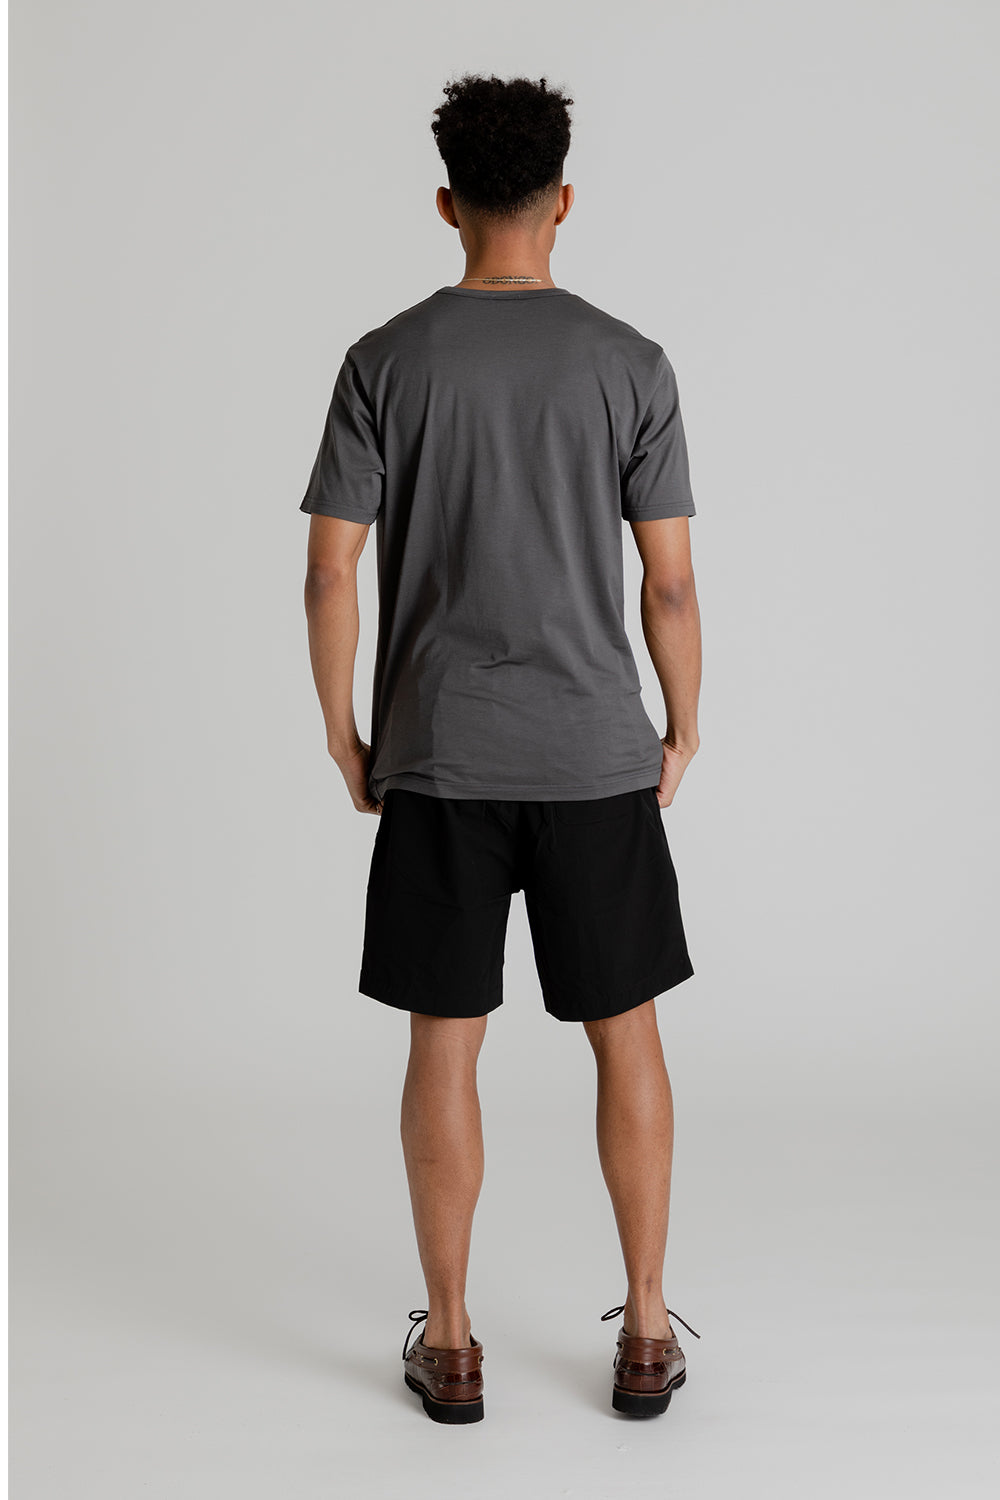 Sunspel Classic T-Shirt in Charcoal